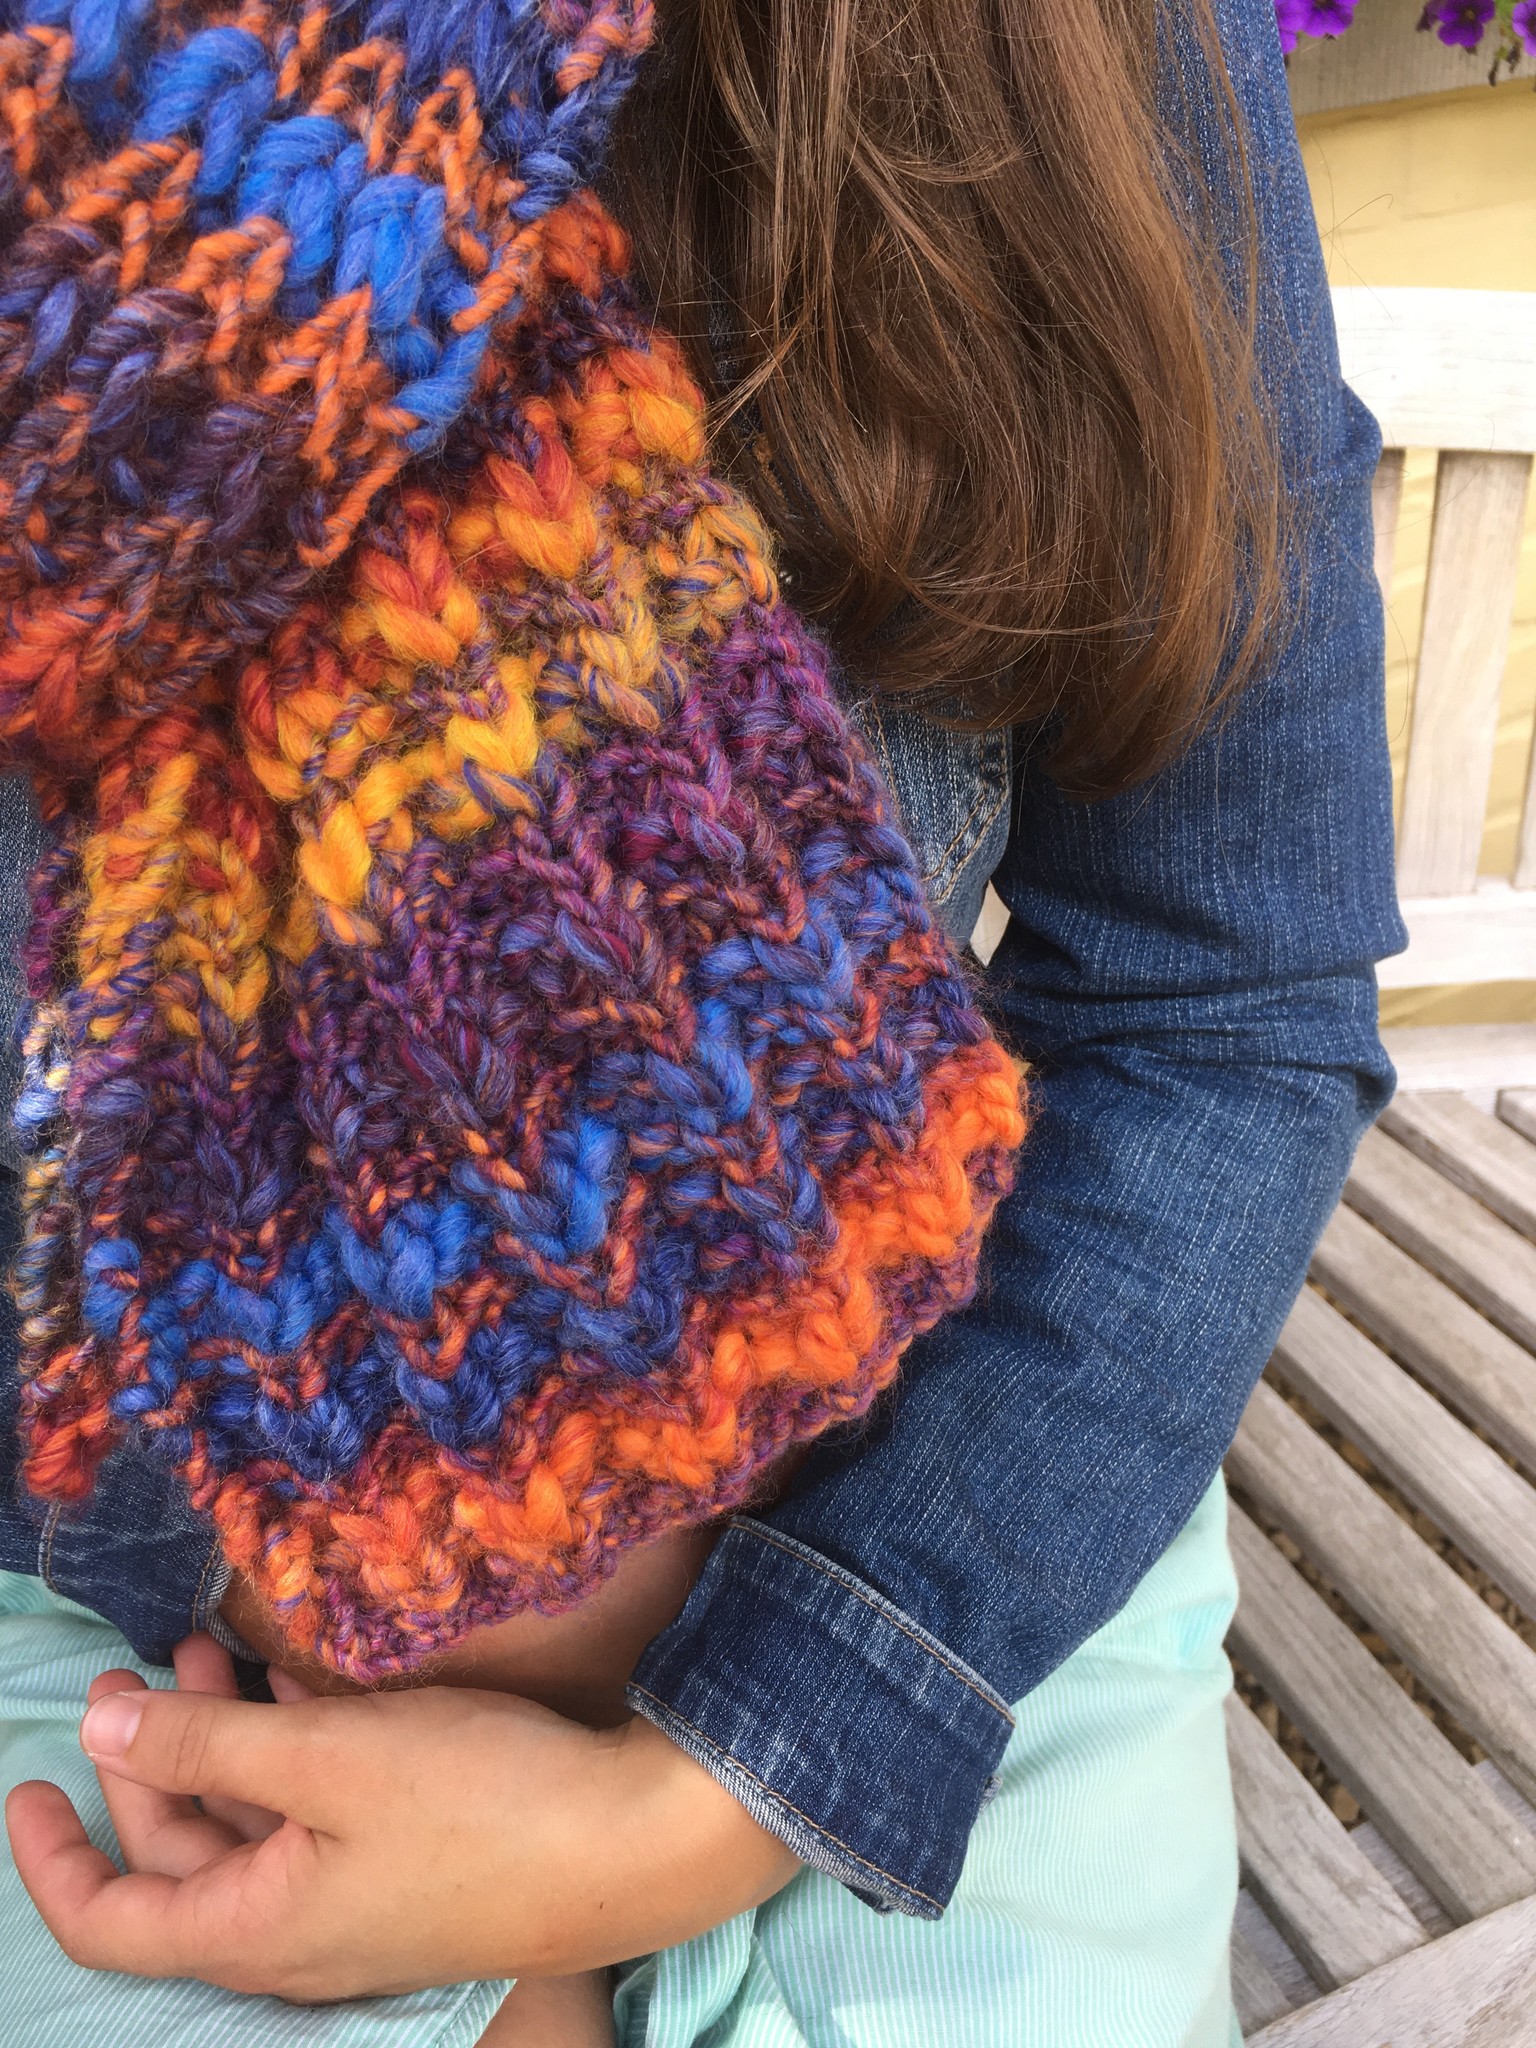 Made by Amberhoeve Multicolored handmade scarf